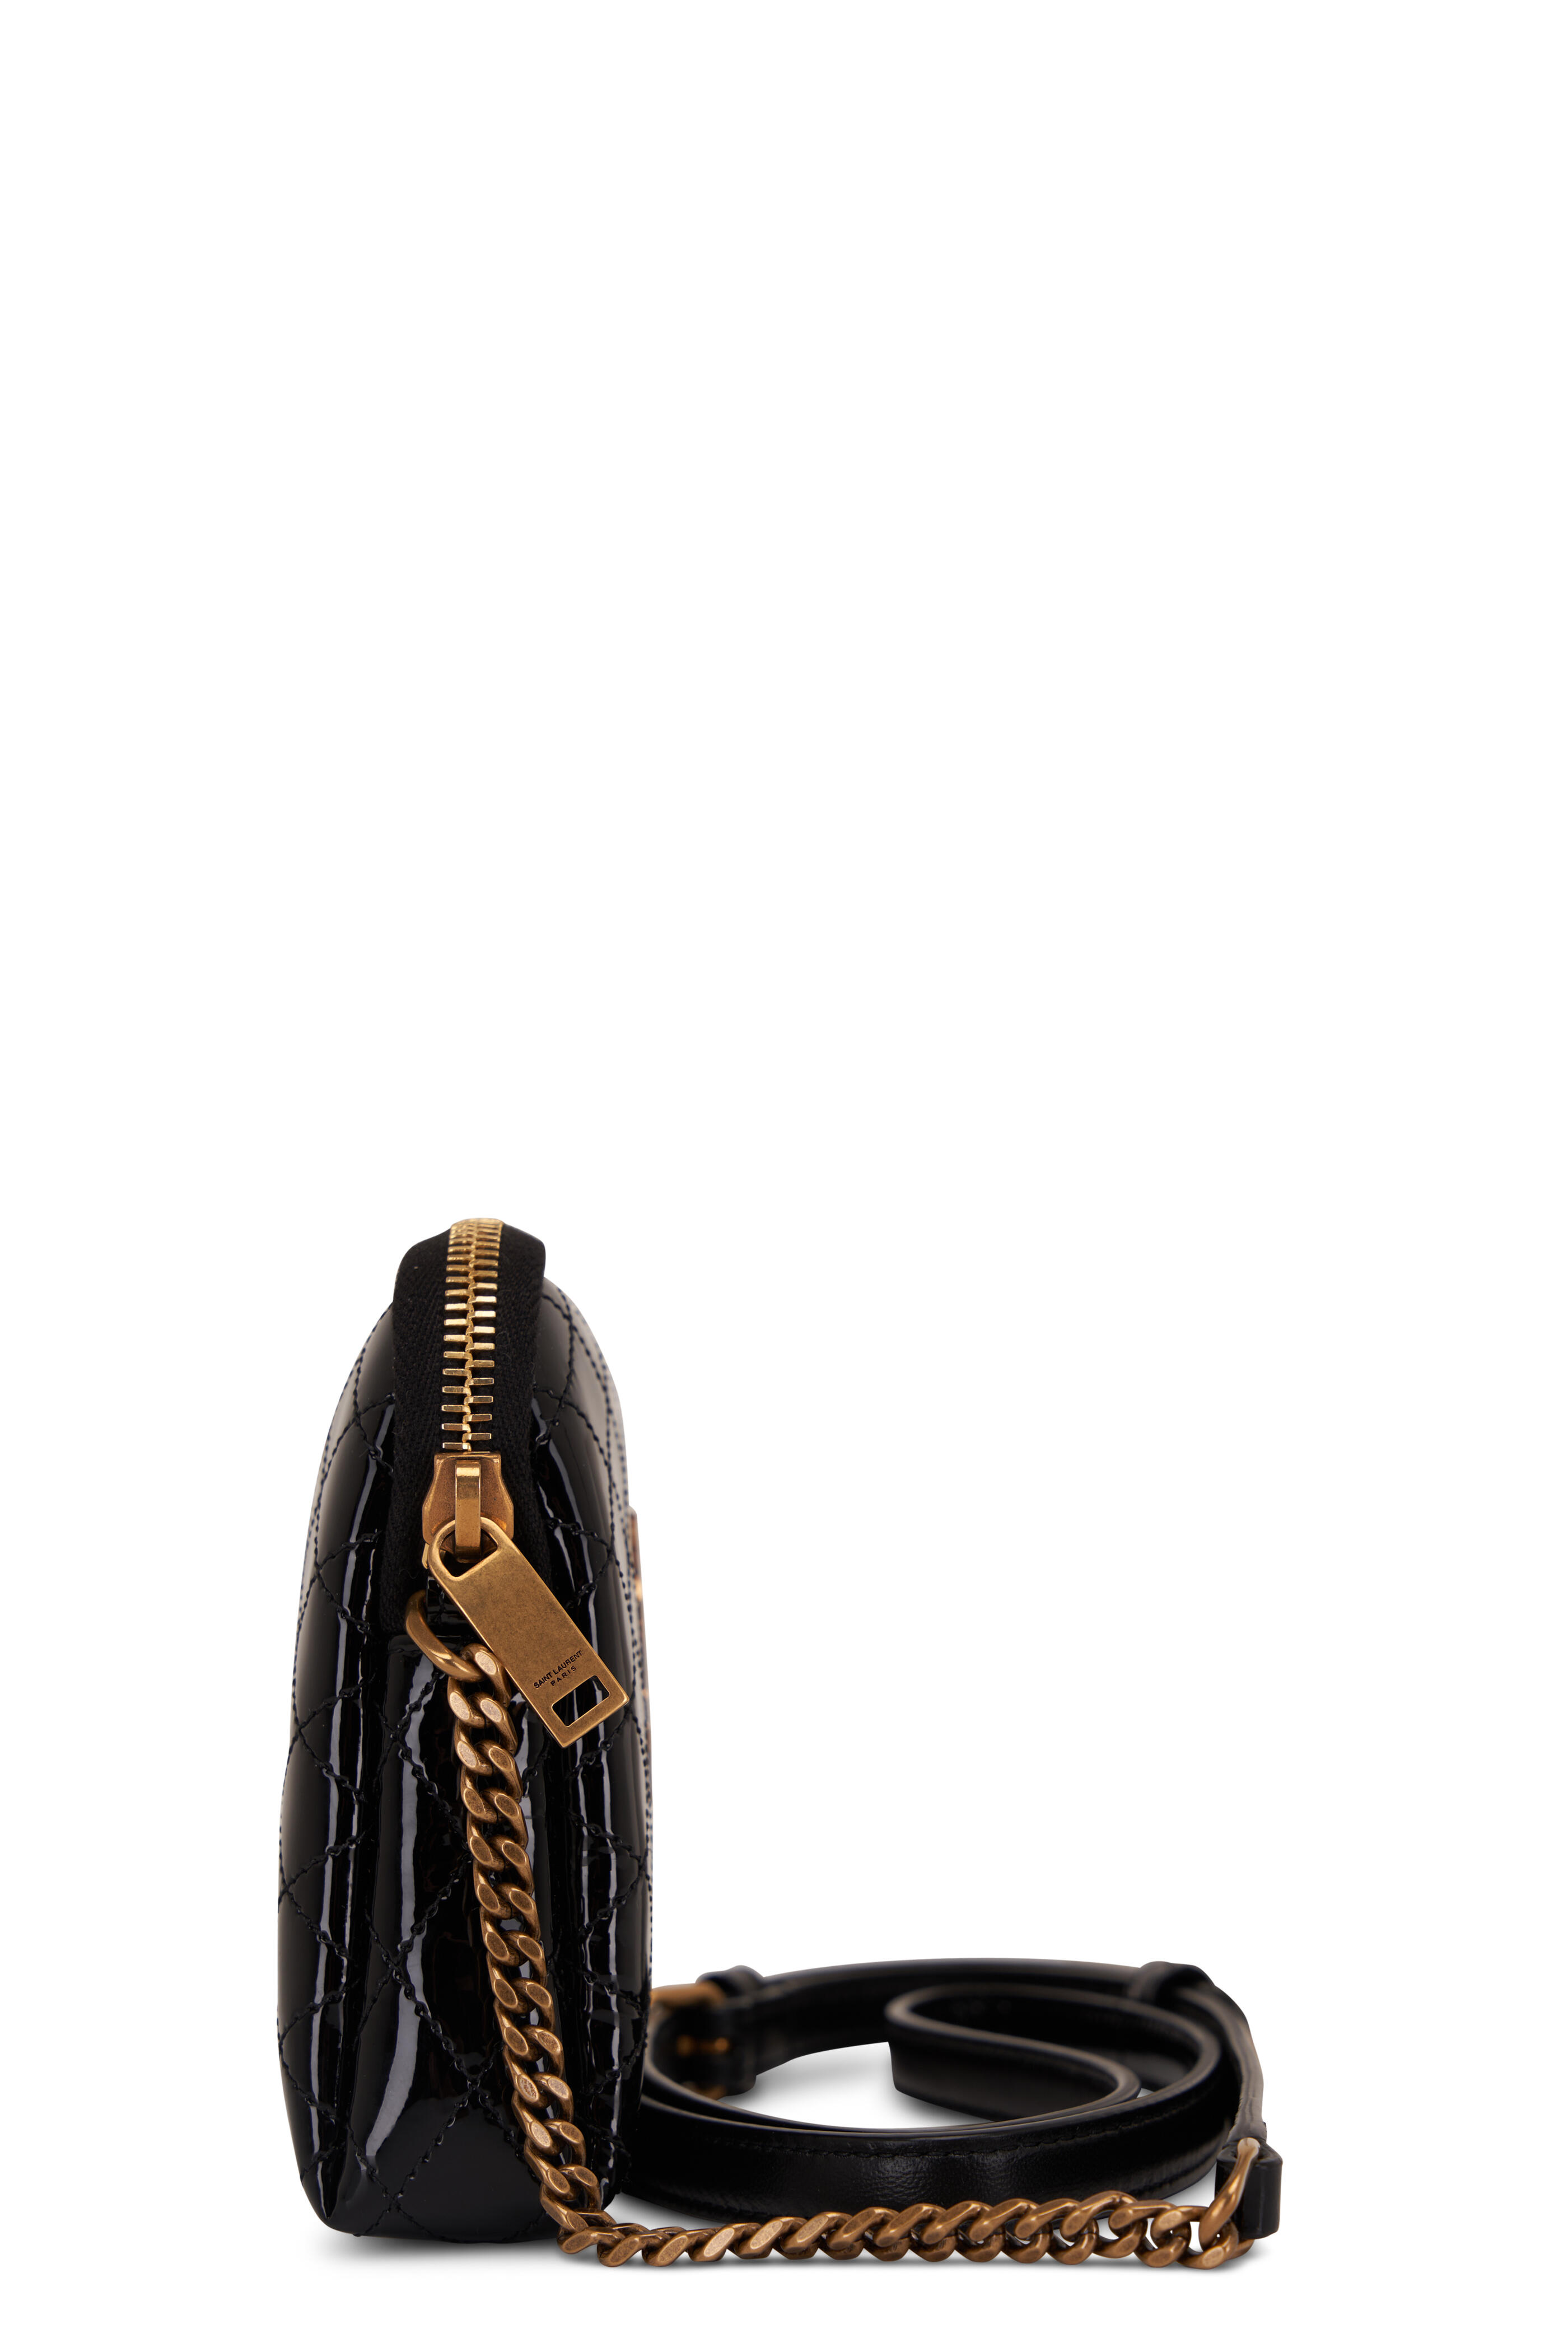 Gaby Patent Leather Shoulder Bag in Black - Saint Laurent